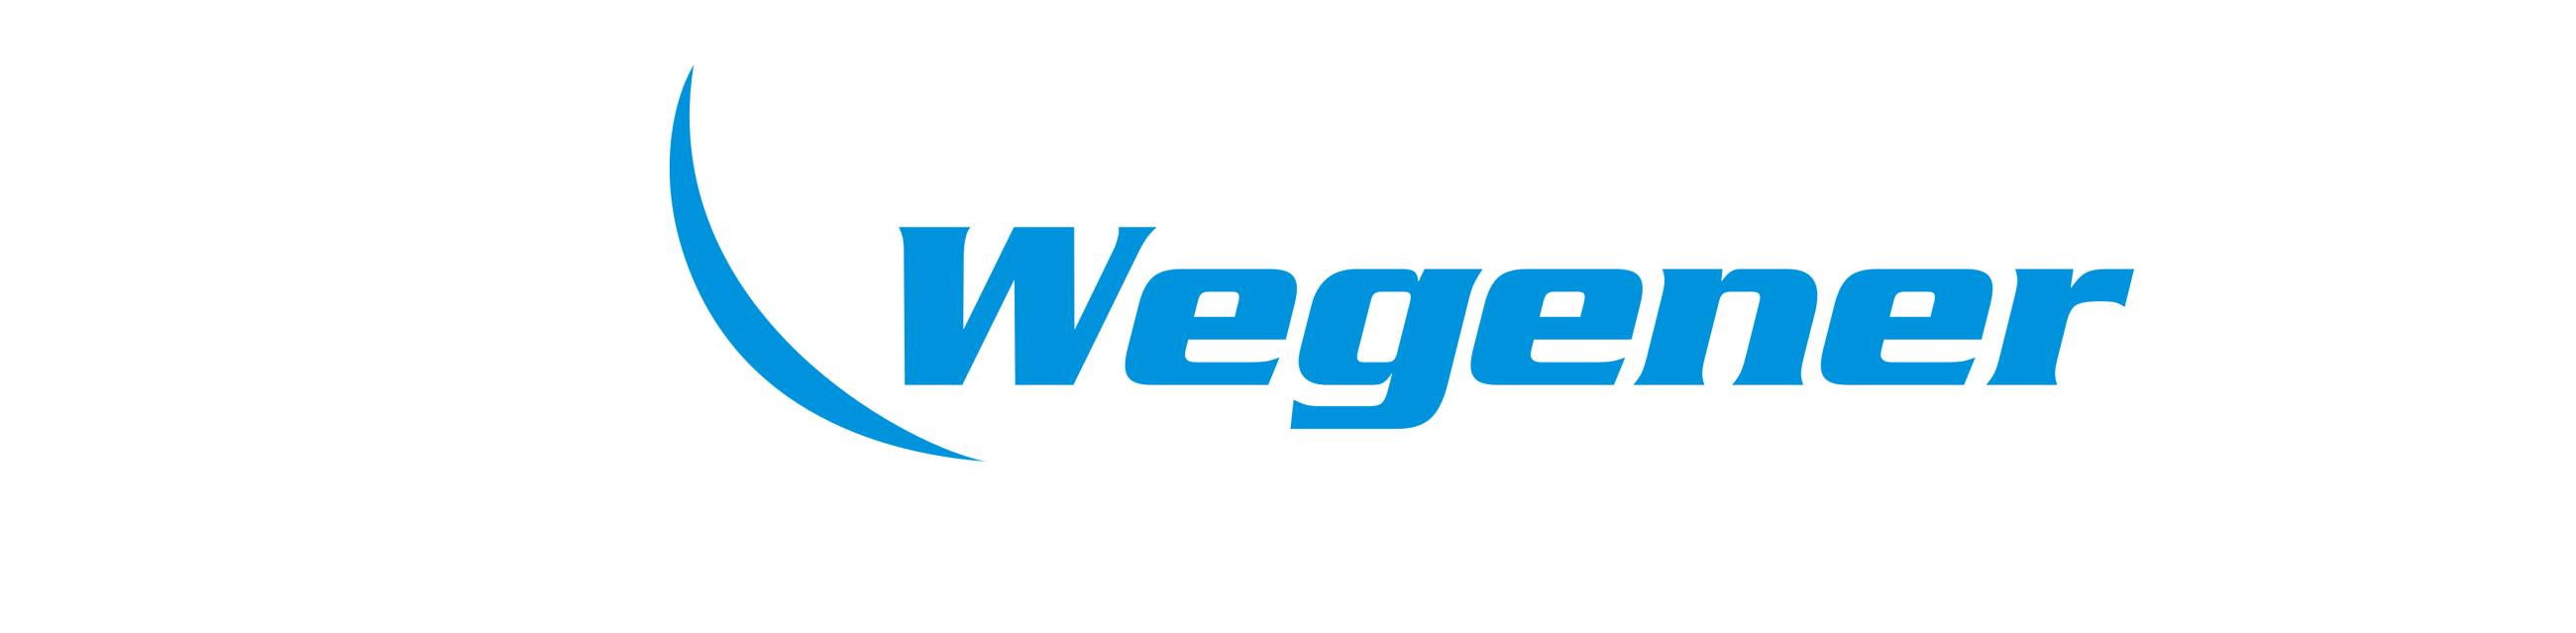 (c) Fahrschule-wegener.com